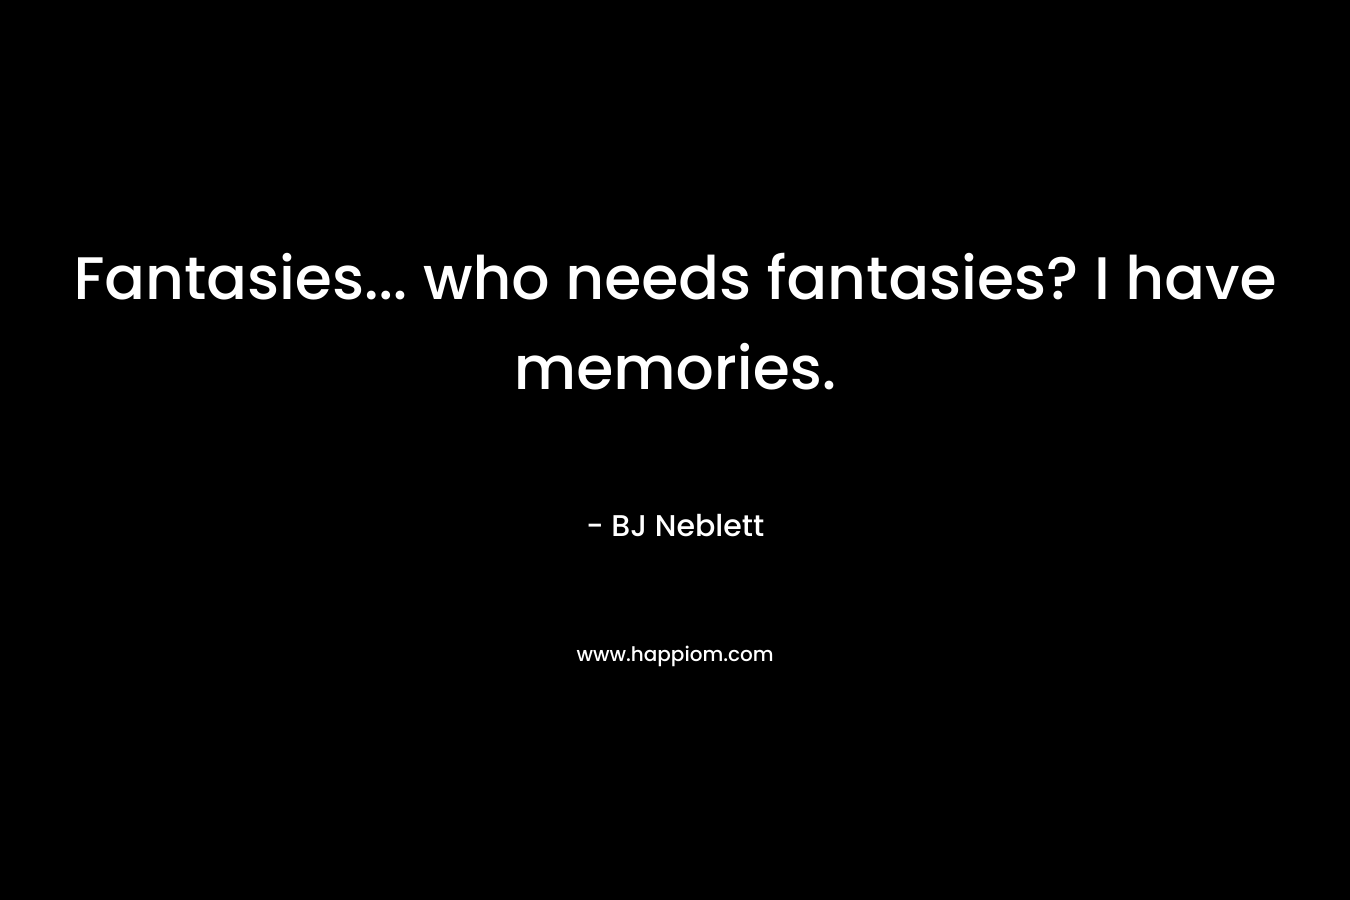 Fantasies... who needs fantasies? I have memories.